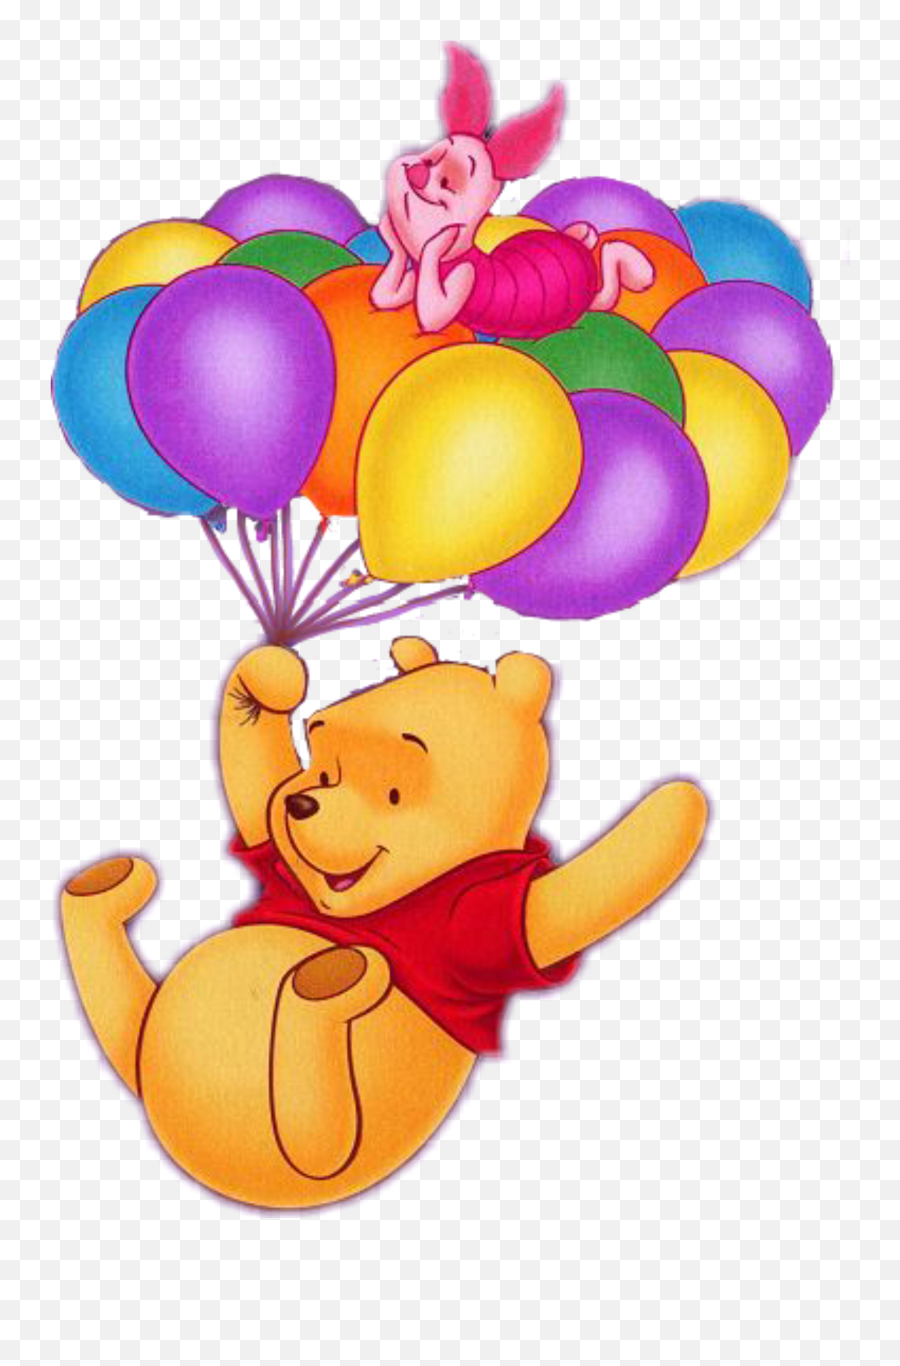 Pooh Poohbear Pooh Bear Poohandfriends Poohandpiglet - Phoo Bear And Friend Emoji,Pooh Emoji